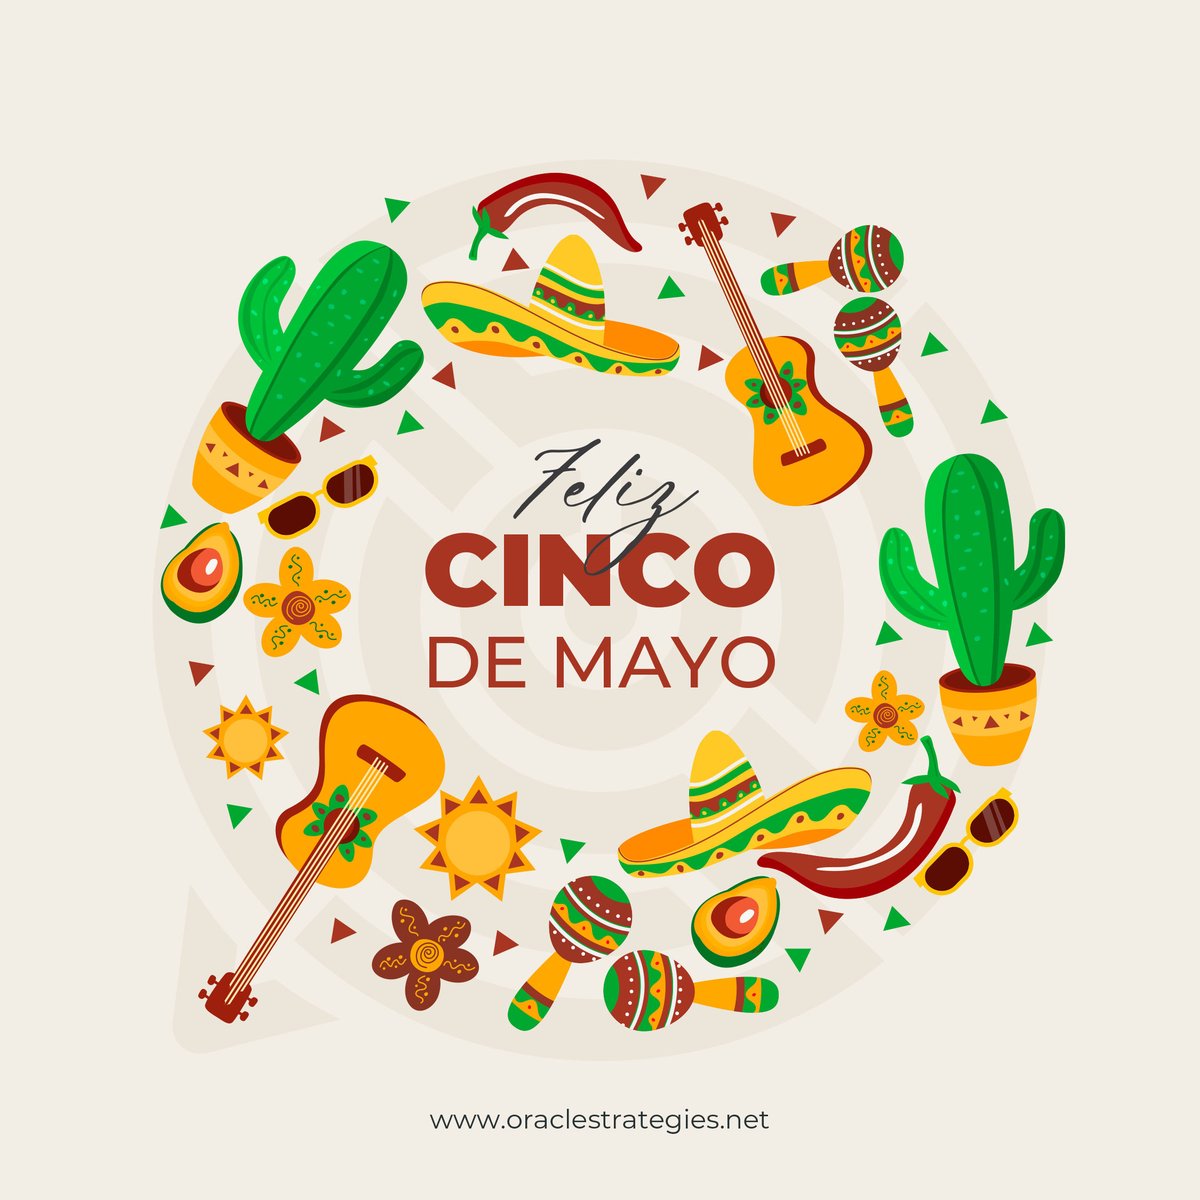 ¡Feliz 5 de Mayo! 🎉 How will you celebrate the day? #5deMayo #CincoDeMayoParty #CincoDeMayoWeekend #Fiesta #OracleStrategies